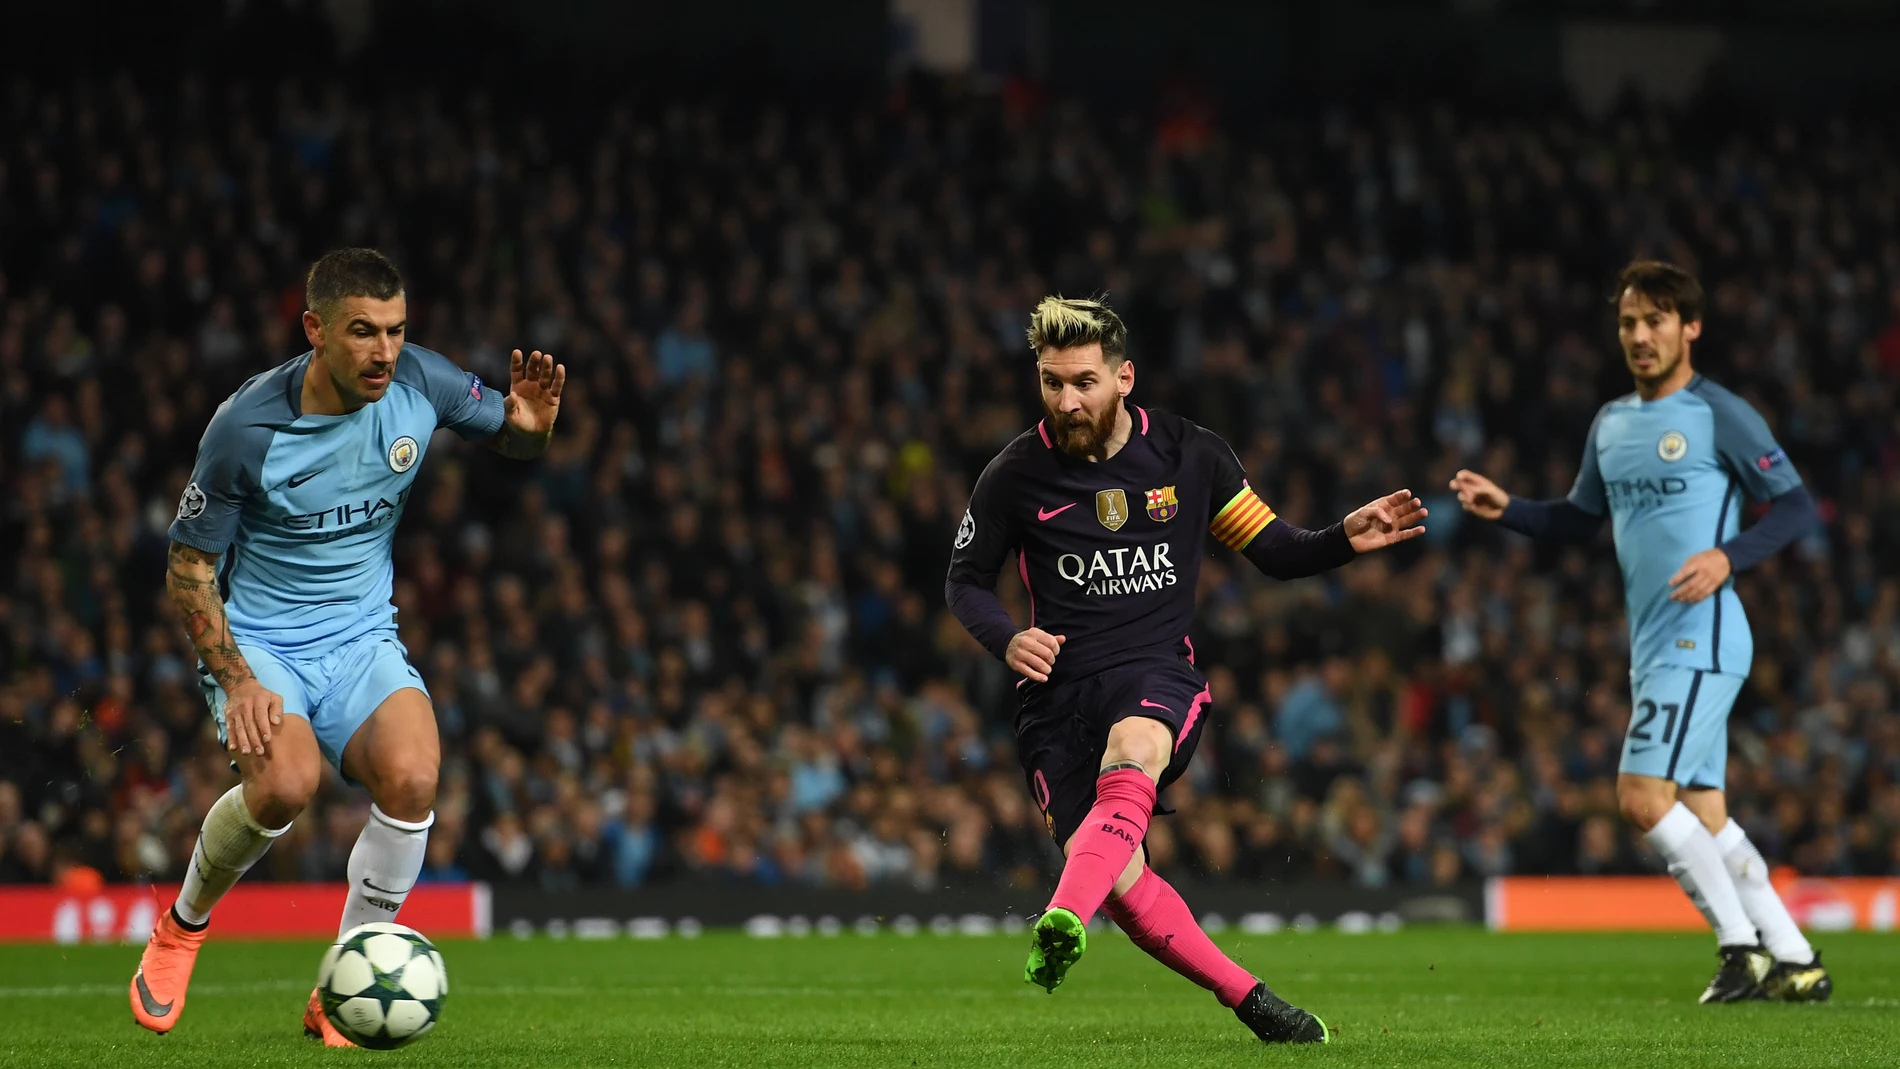 Leo Messi pone el 0-1 en el marcador a favor del Barça